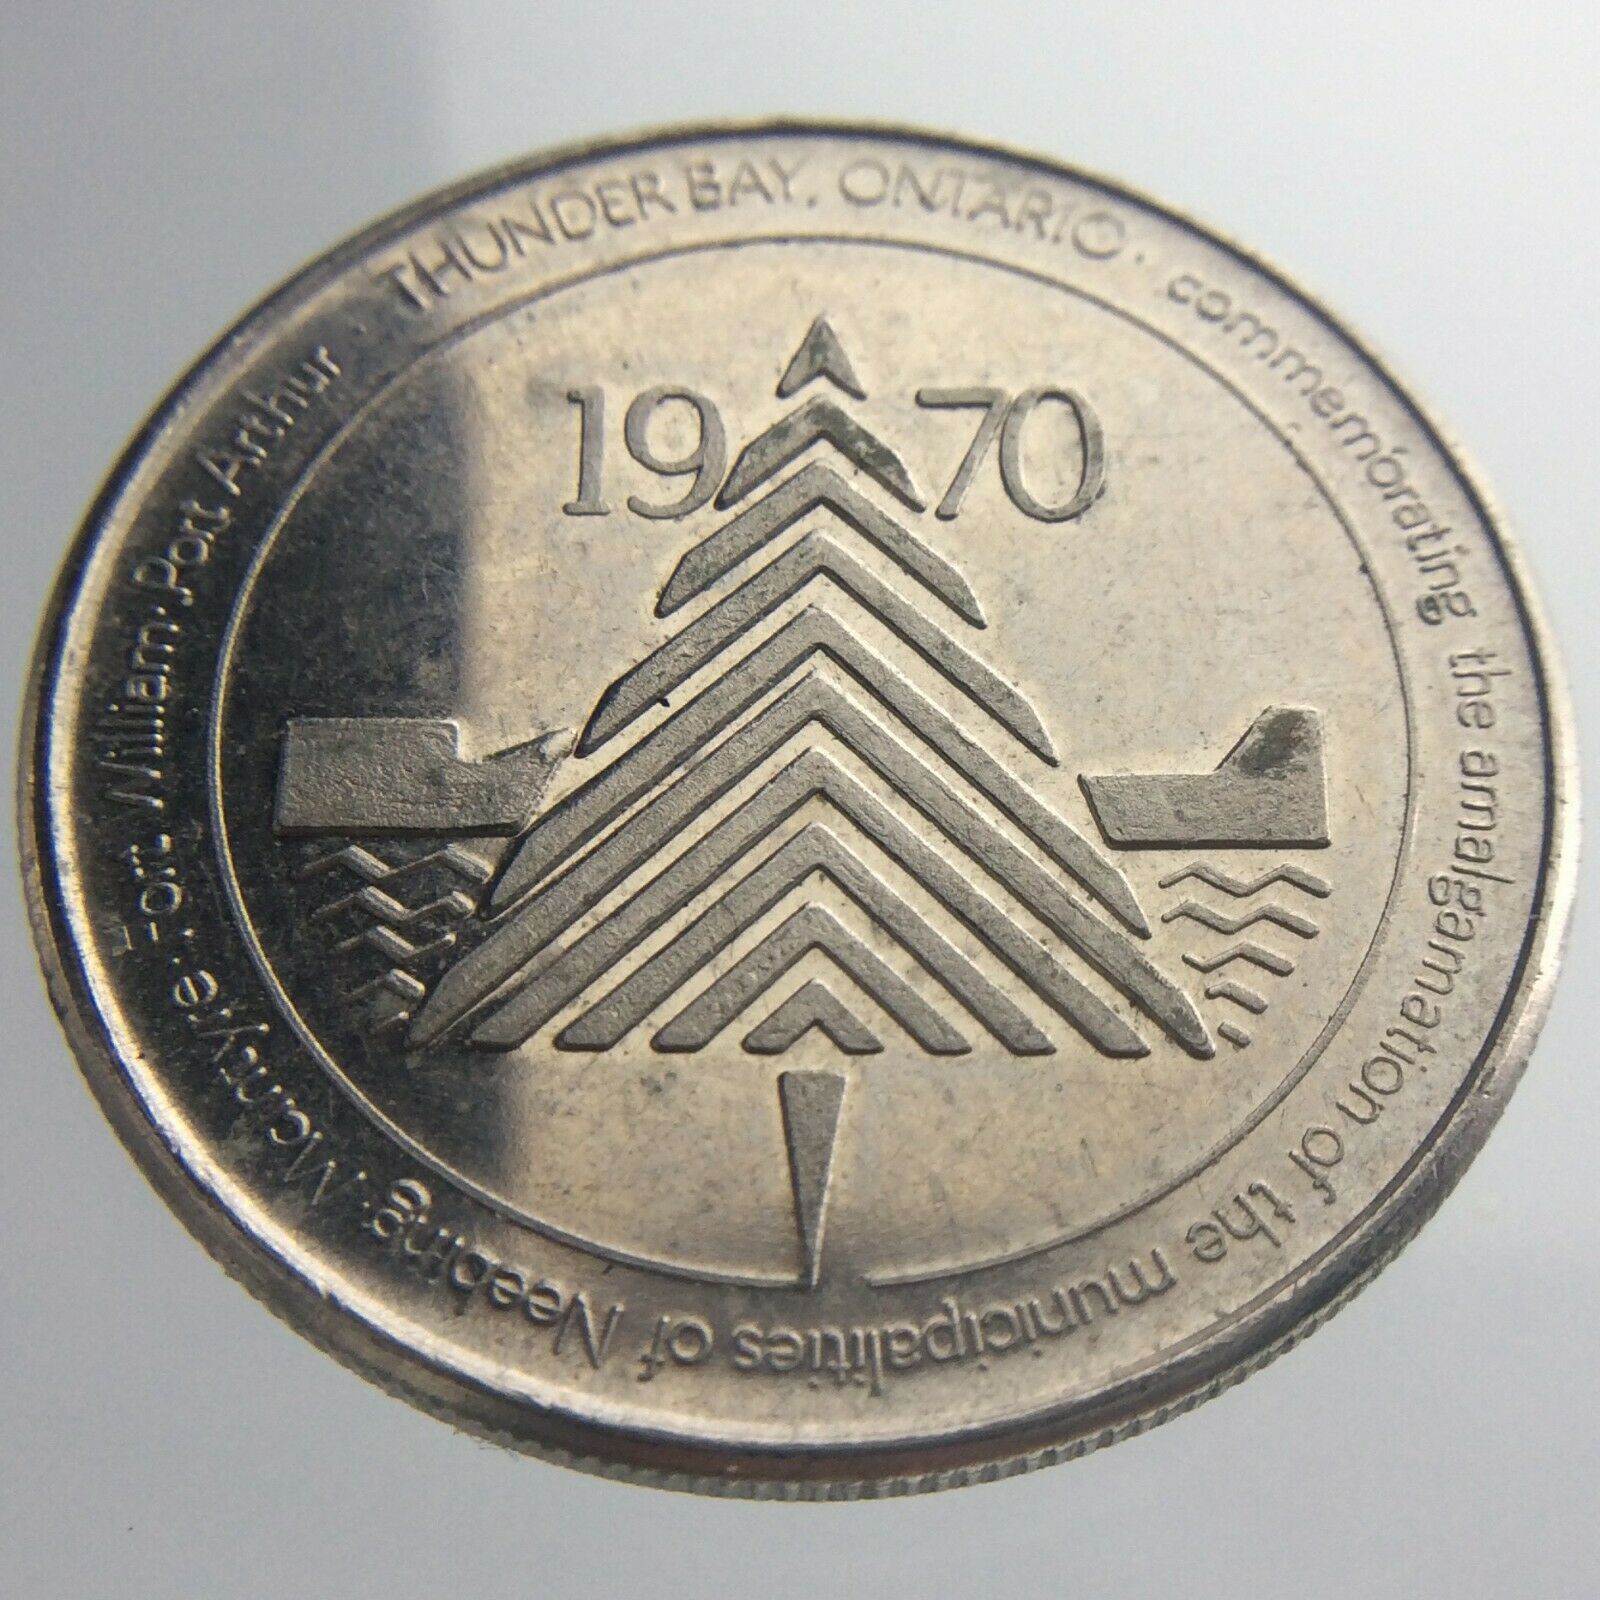 1970 Thunder Bay Ontario Canada Trade Dollar V378